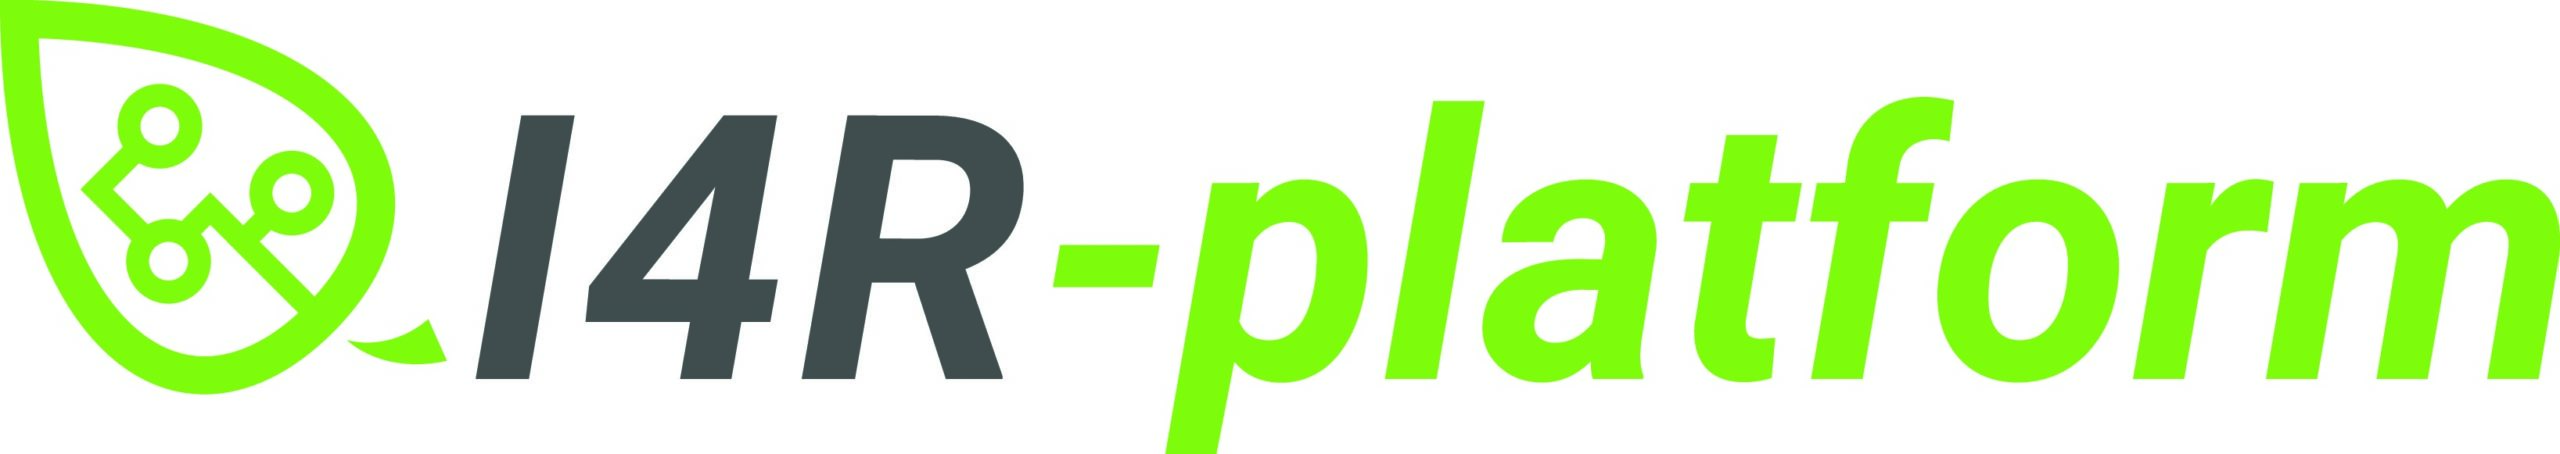 I4RUI_platform-logo.jpg